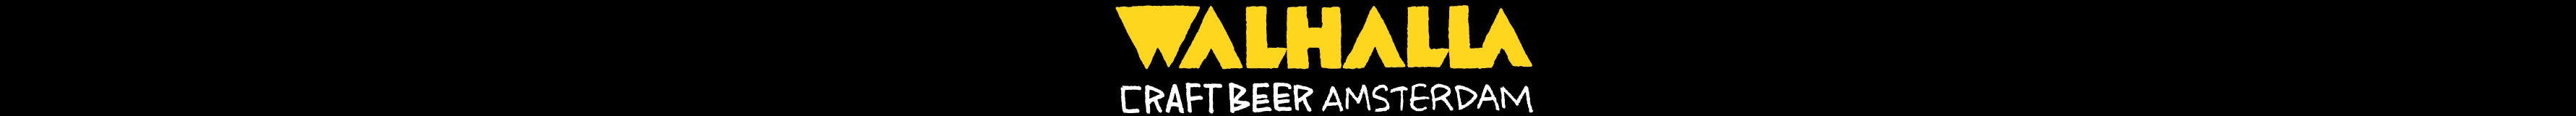 Walhalla Craft Beer